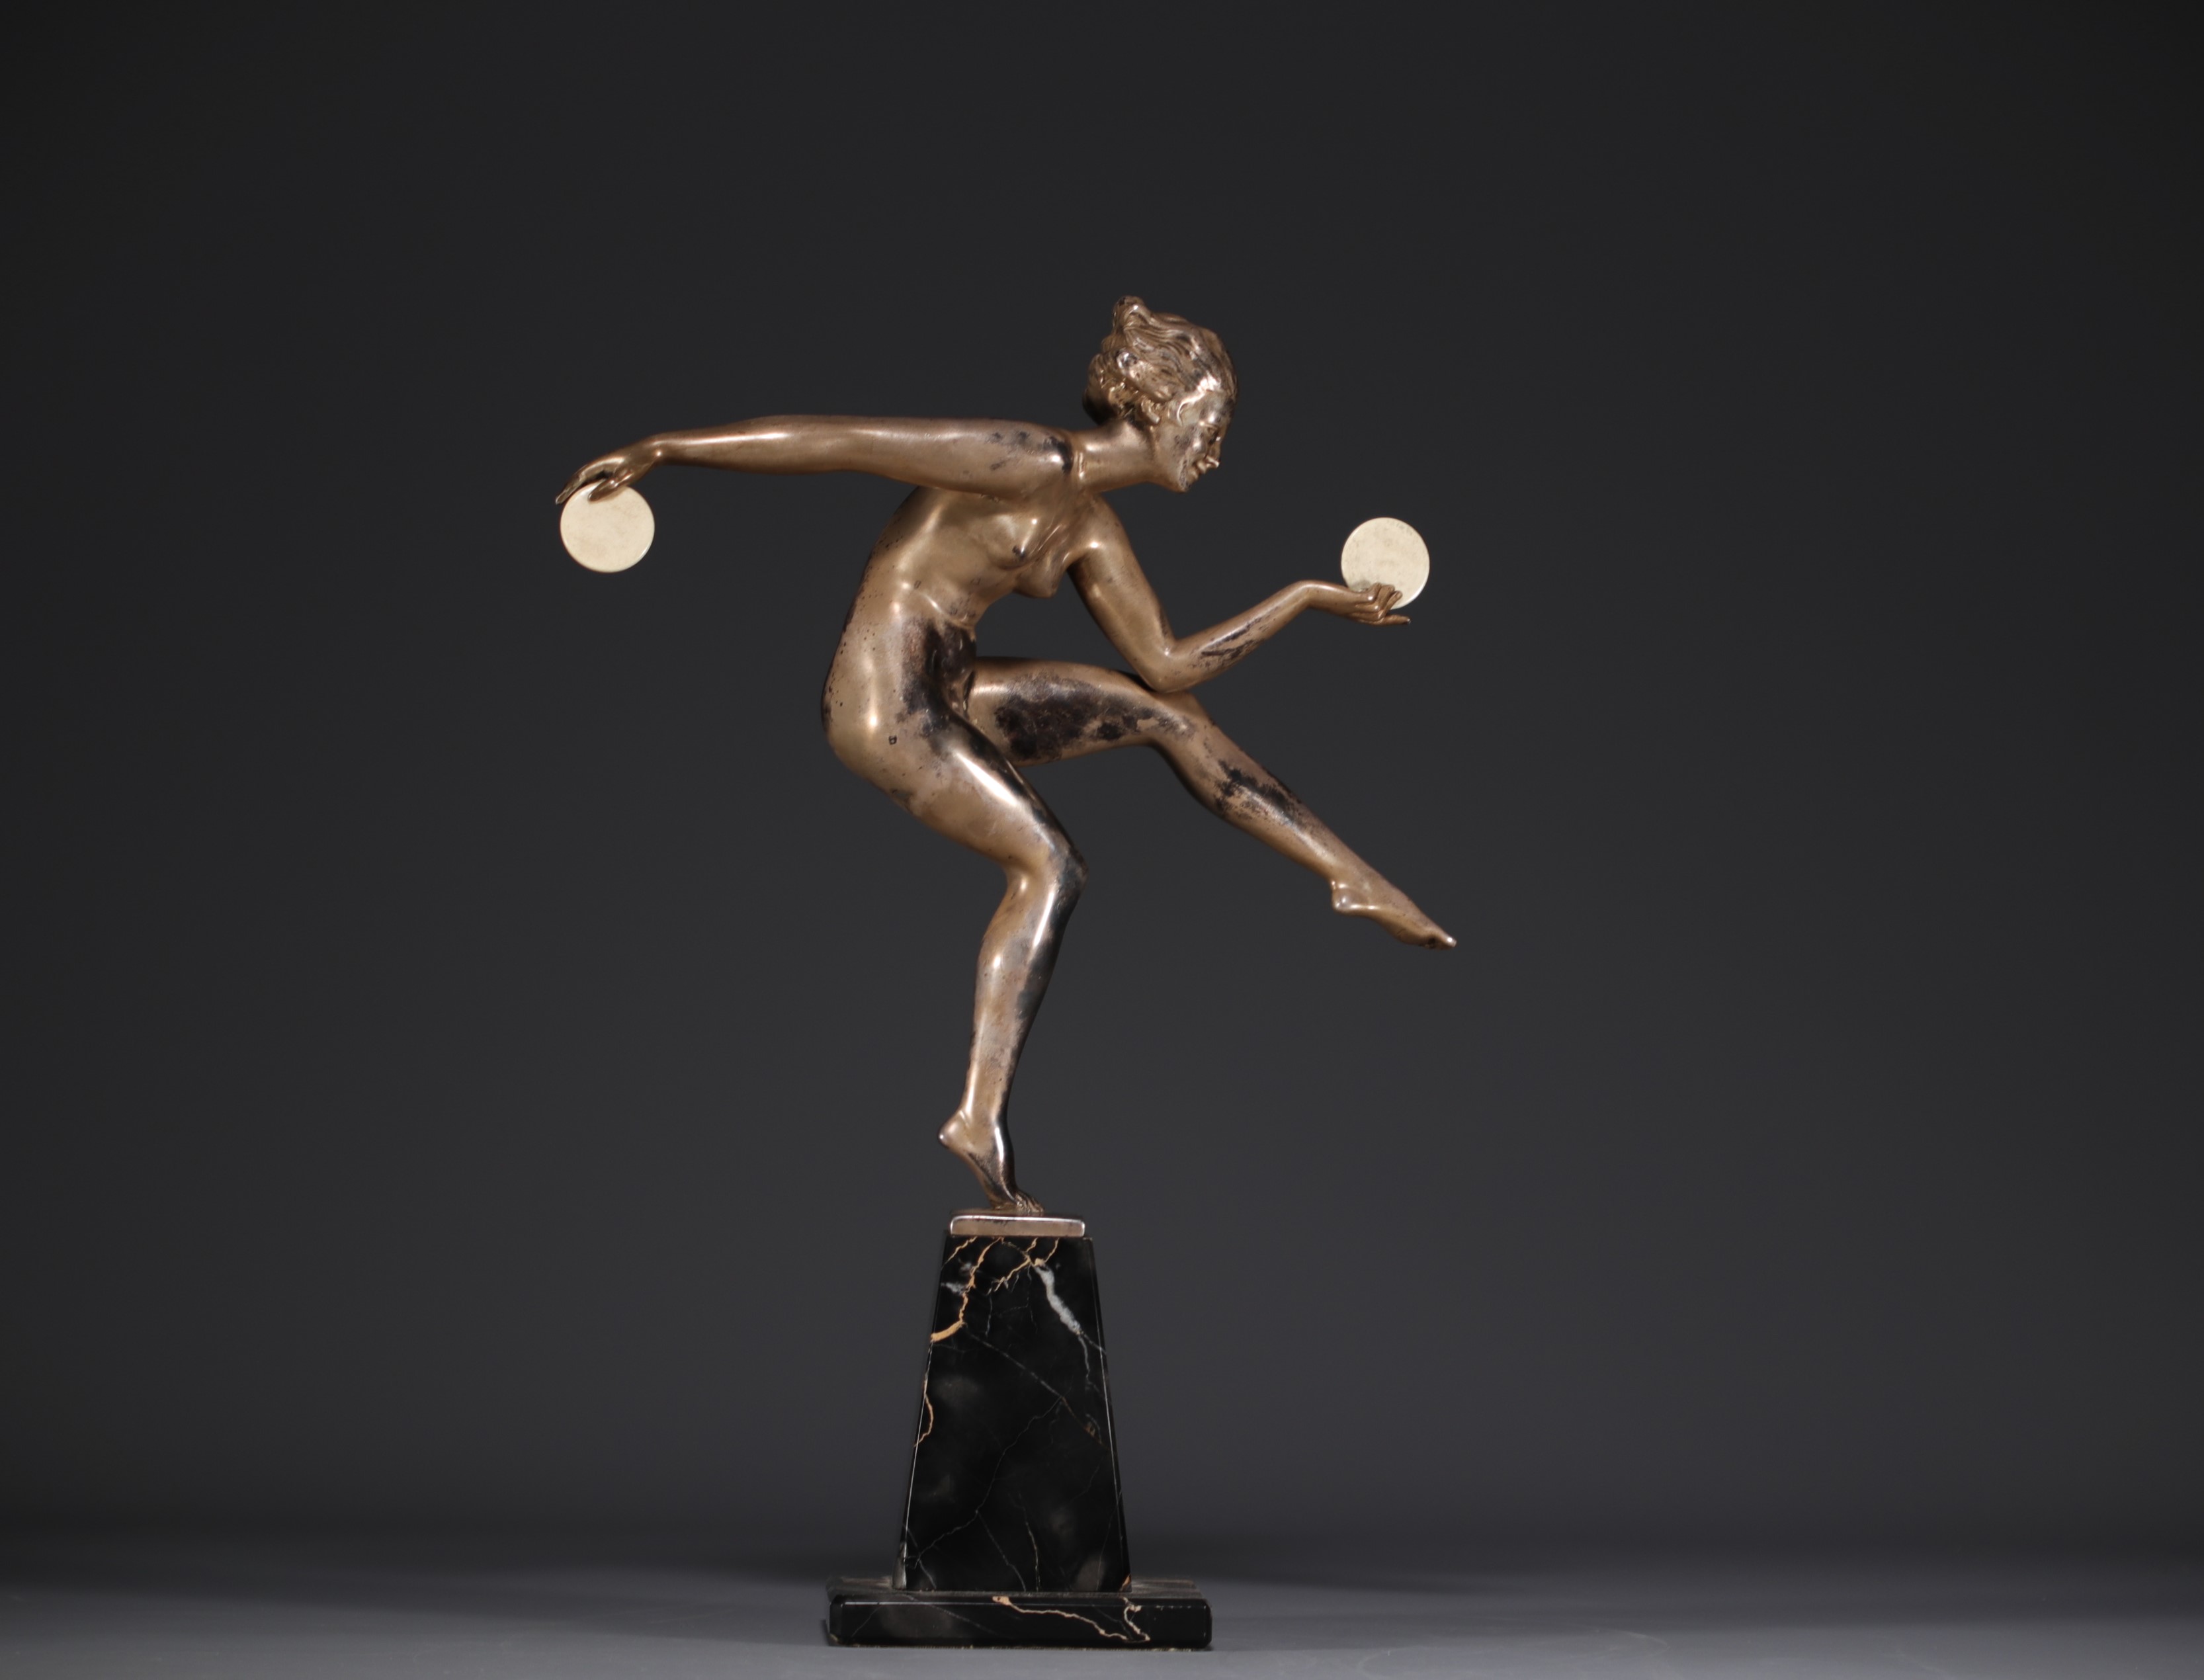 Marcel DERENNE (1886-1948) for Max Le Verrier - "Danseuse aux disques", an imposing sculpture in sil - Image 4 of 6